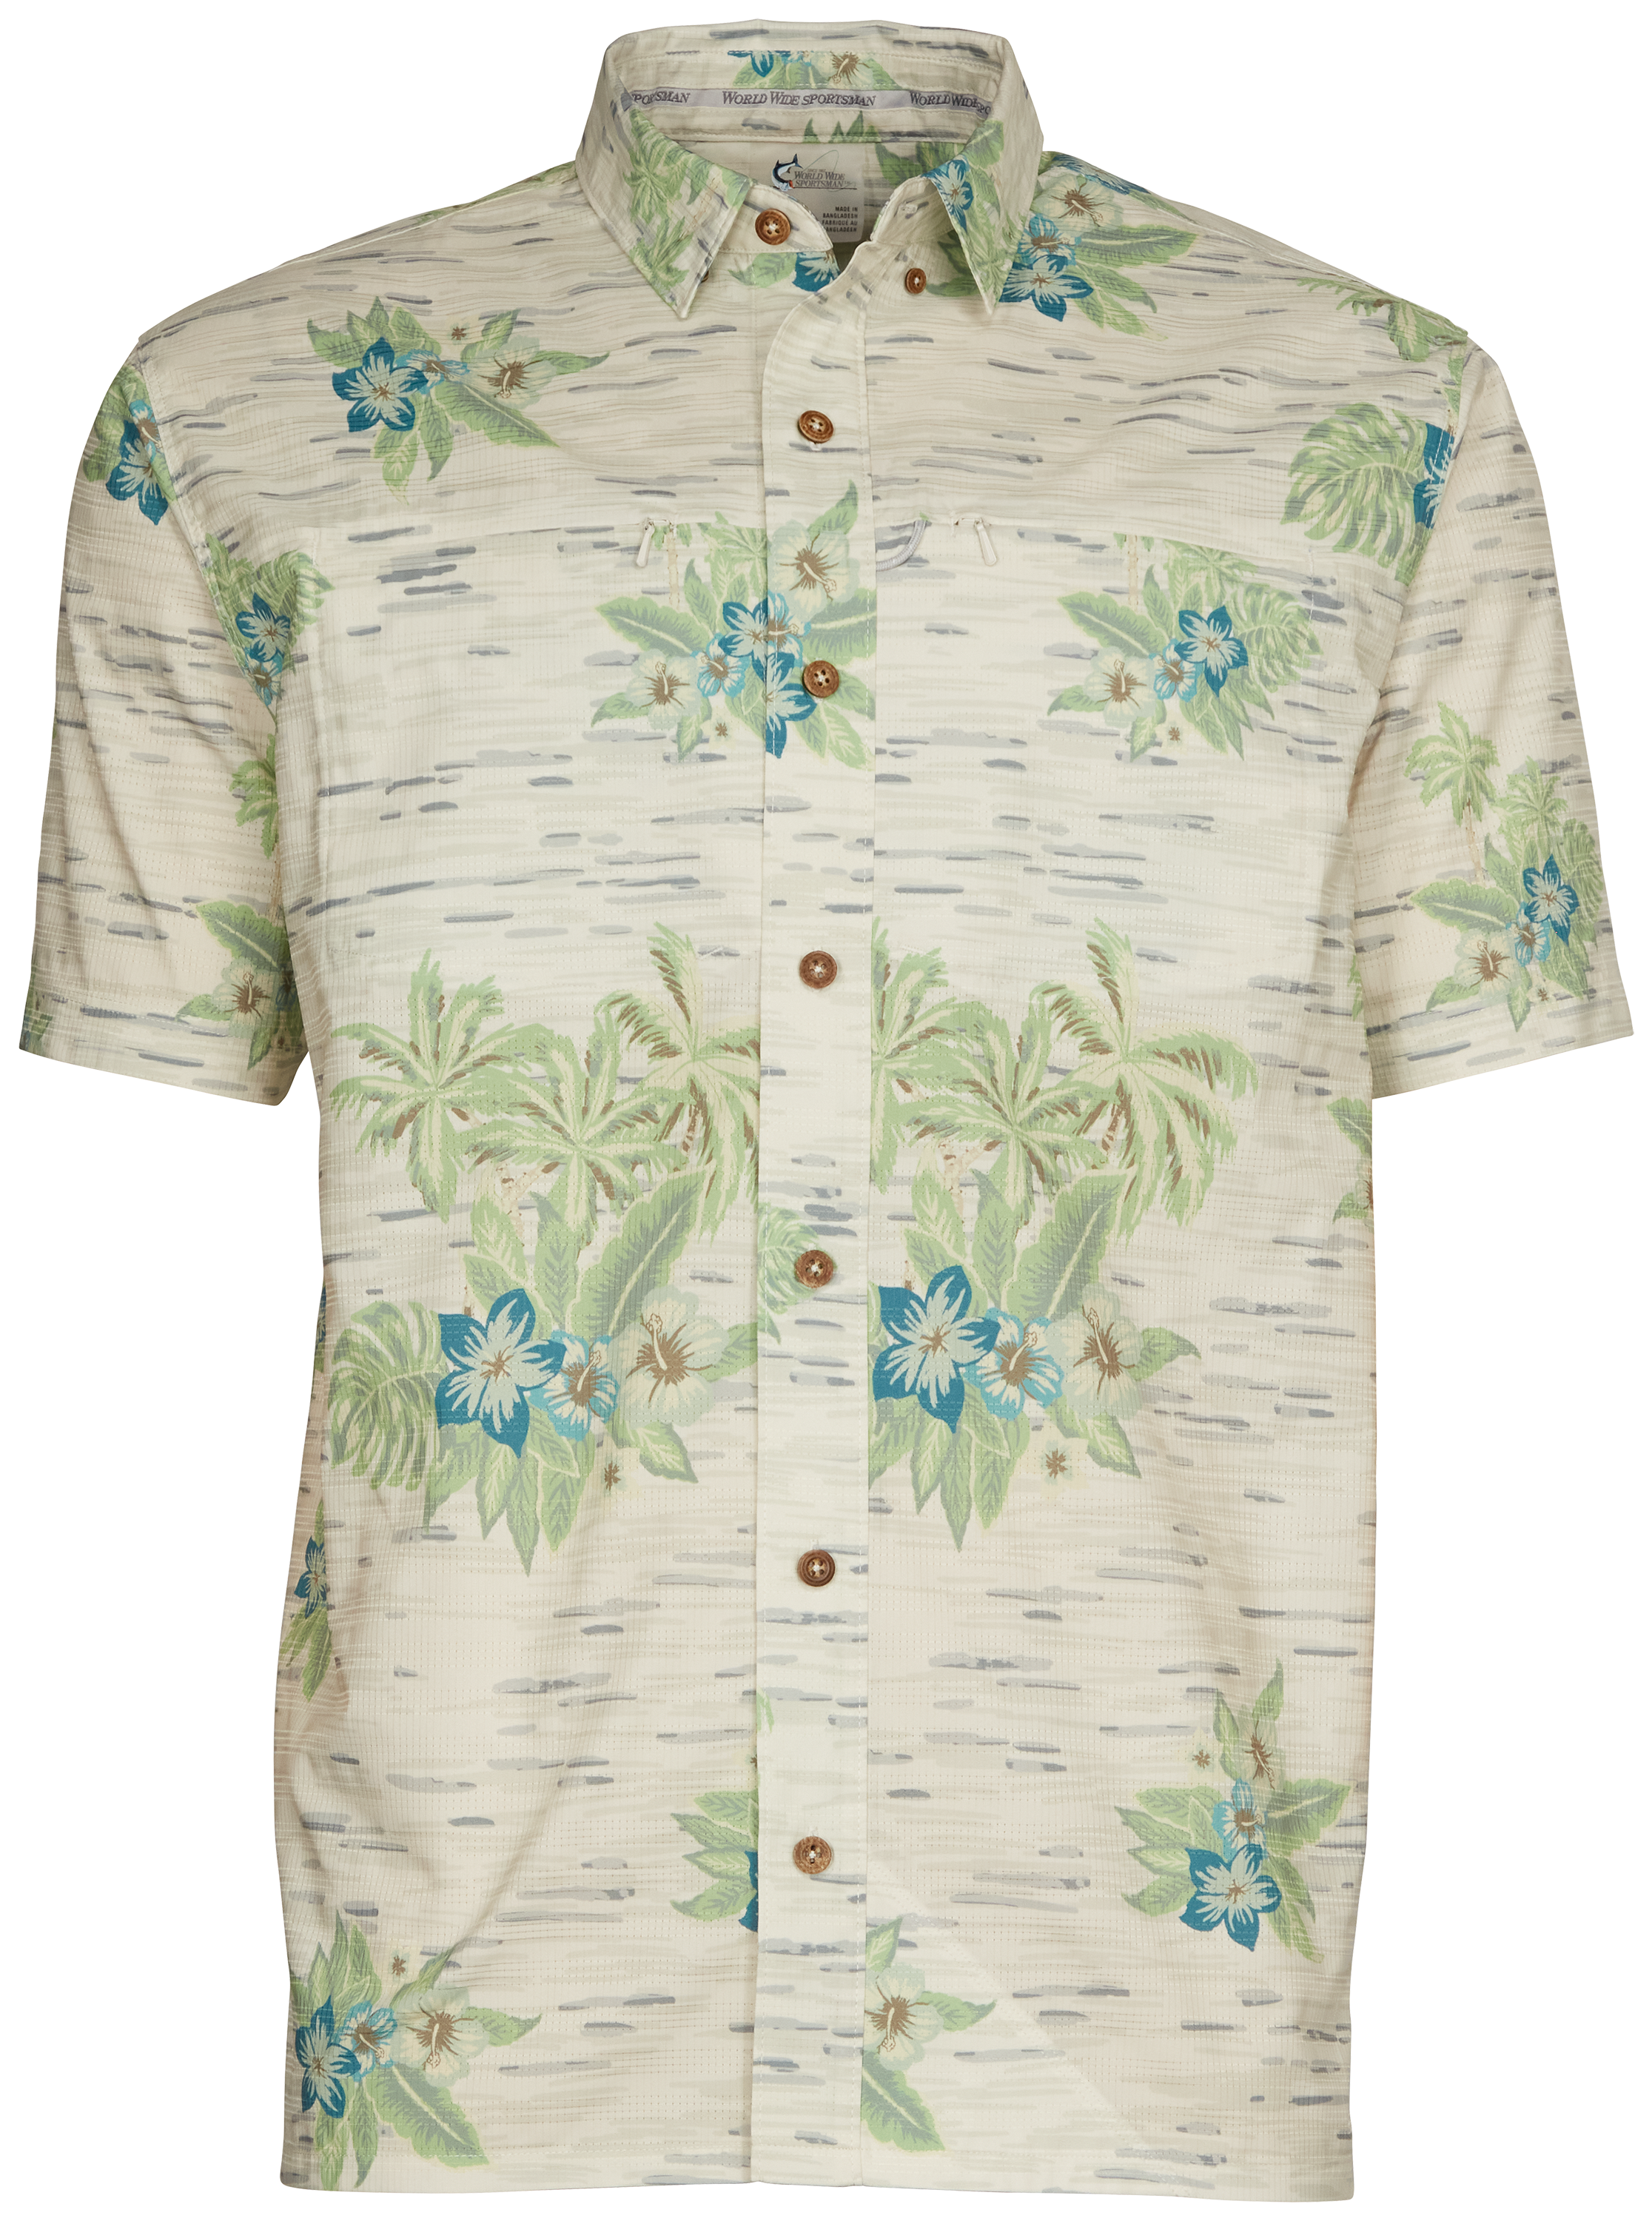 World Wide Sportsman Seacrest Print Short-Sleeve Button-Down Shirt for Men - Apricot Palms - L